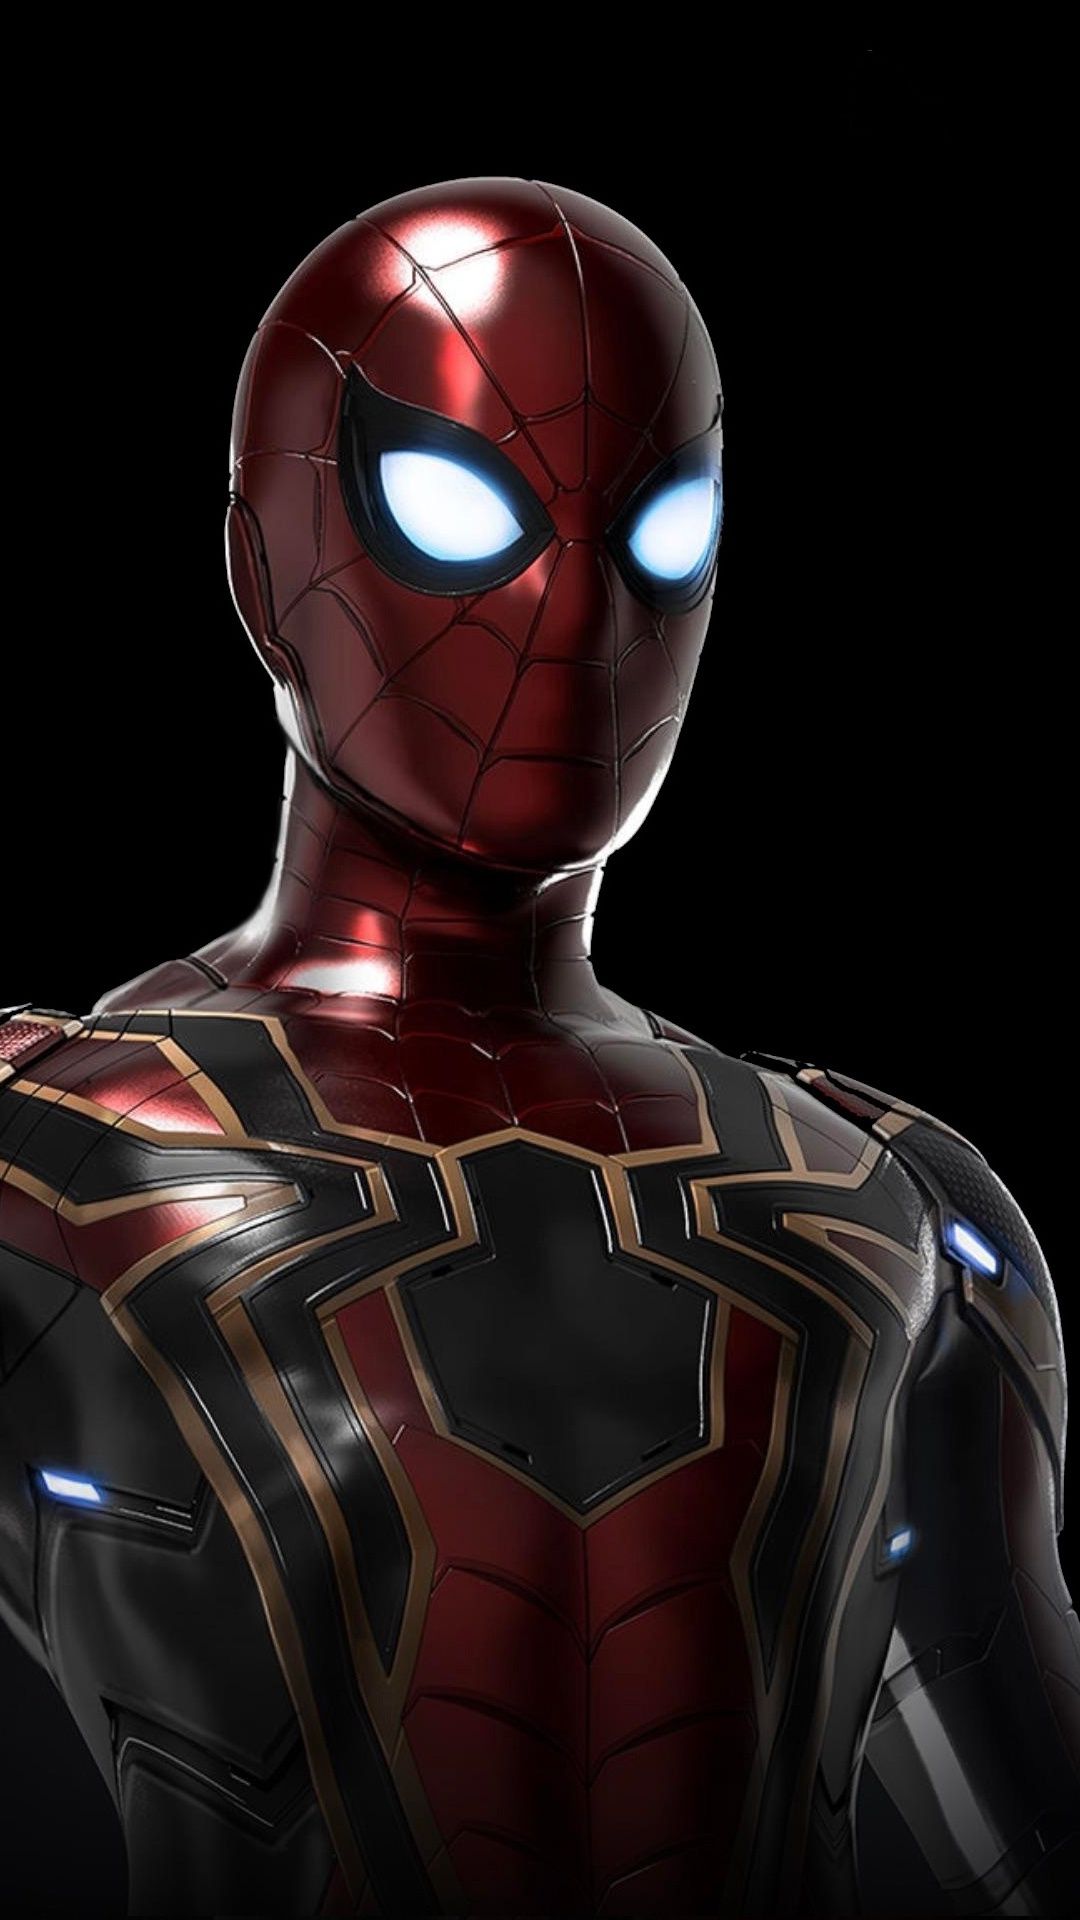 Iron Spider Avengers Infinity War Movie Artwork